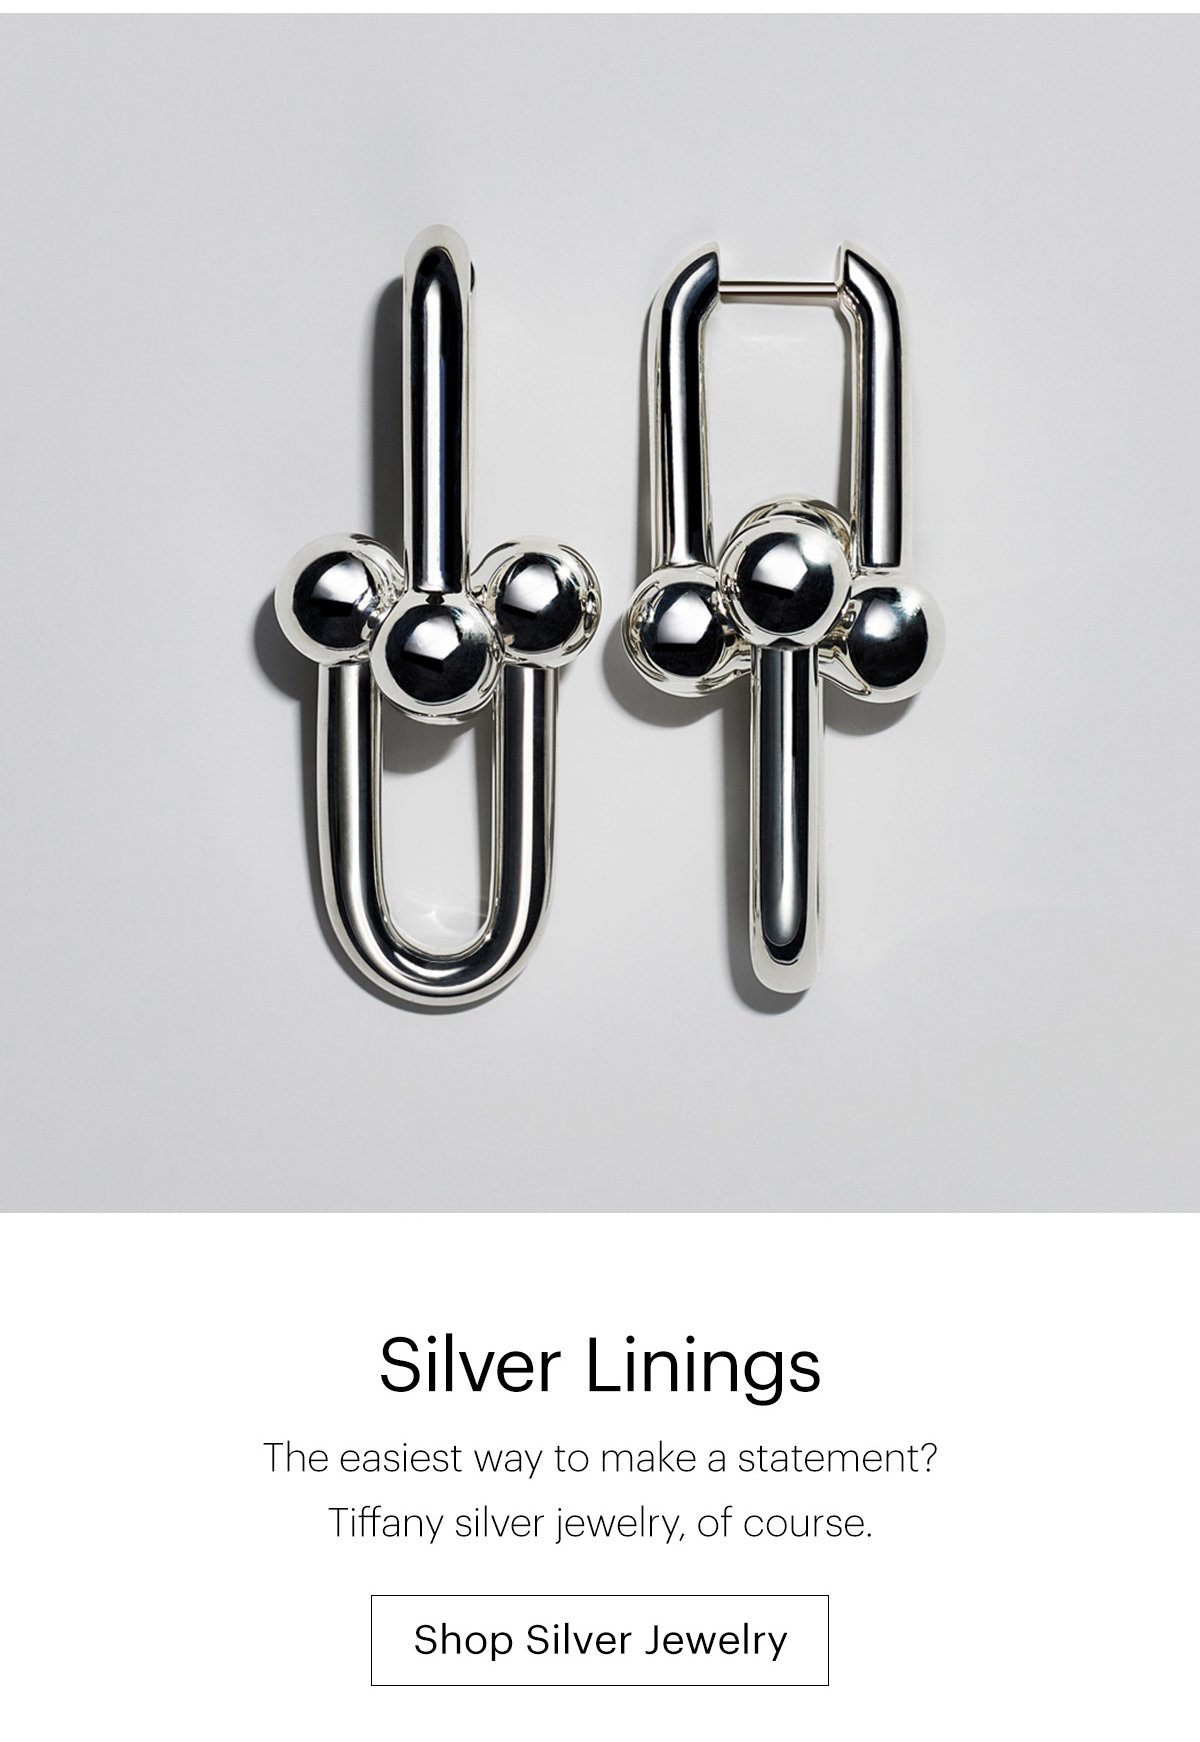 Shop Silver Jewelry